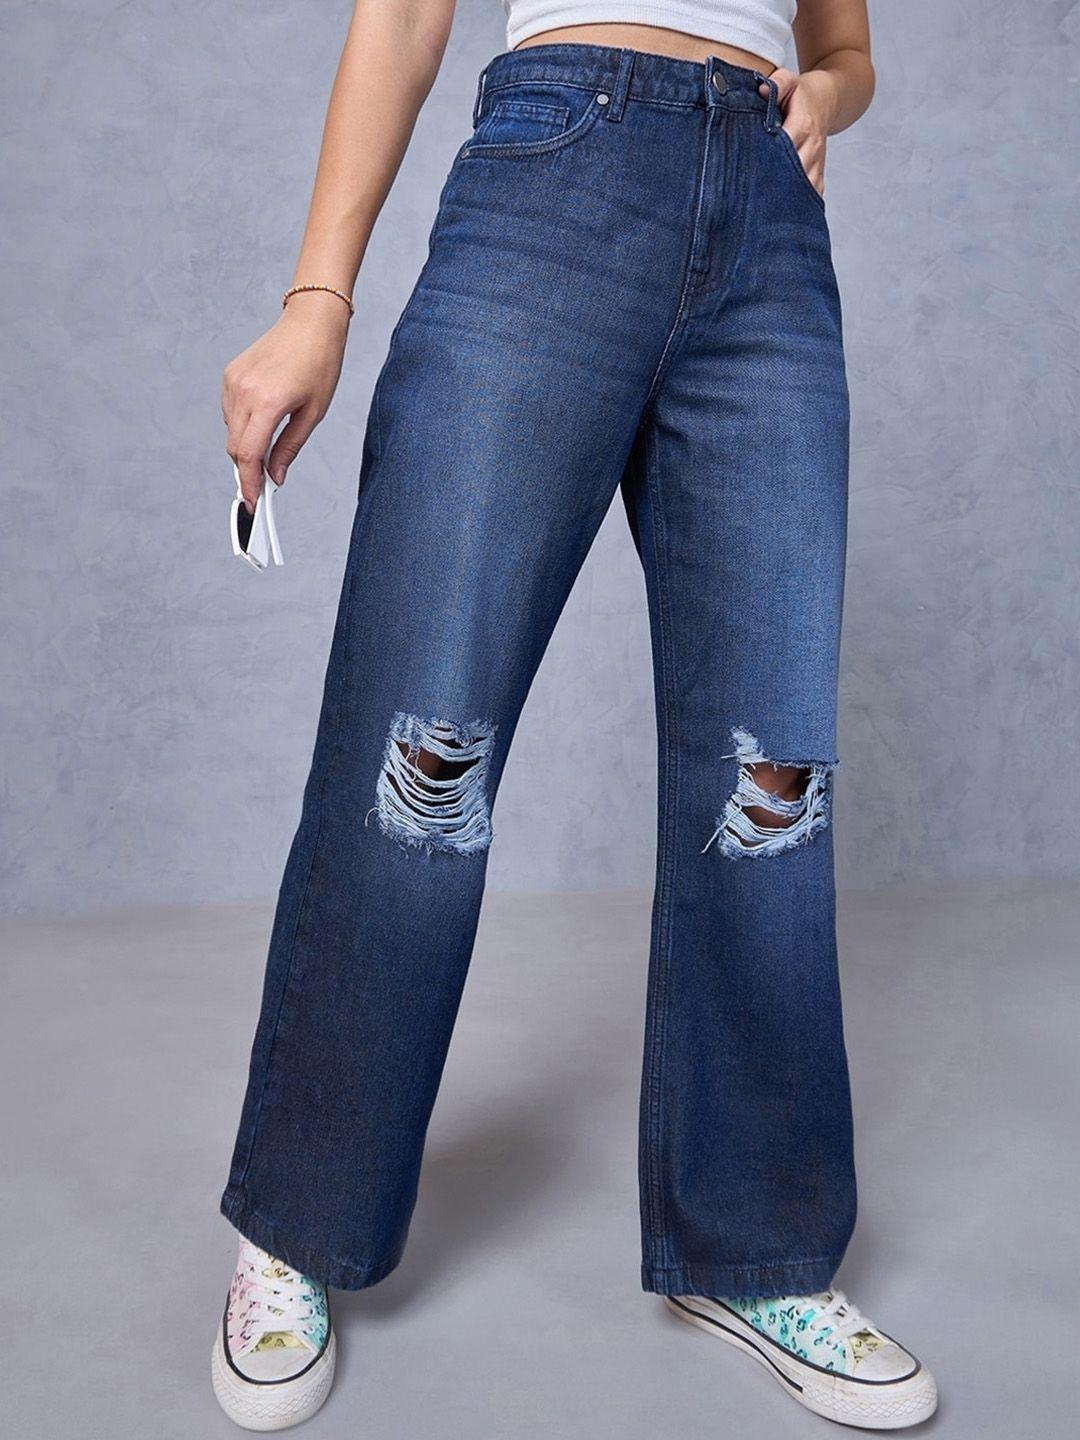 bewakoof-women-wide-leg-high-rise-mildly-distressed-light-fade-cotton-jeans